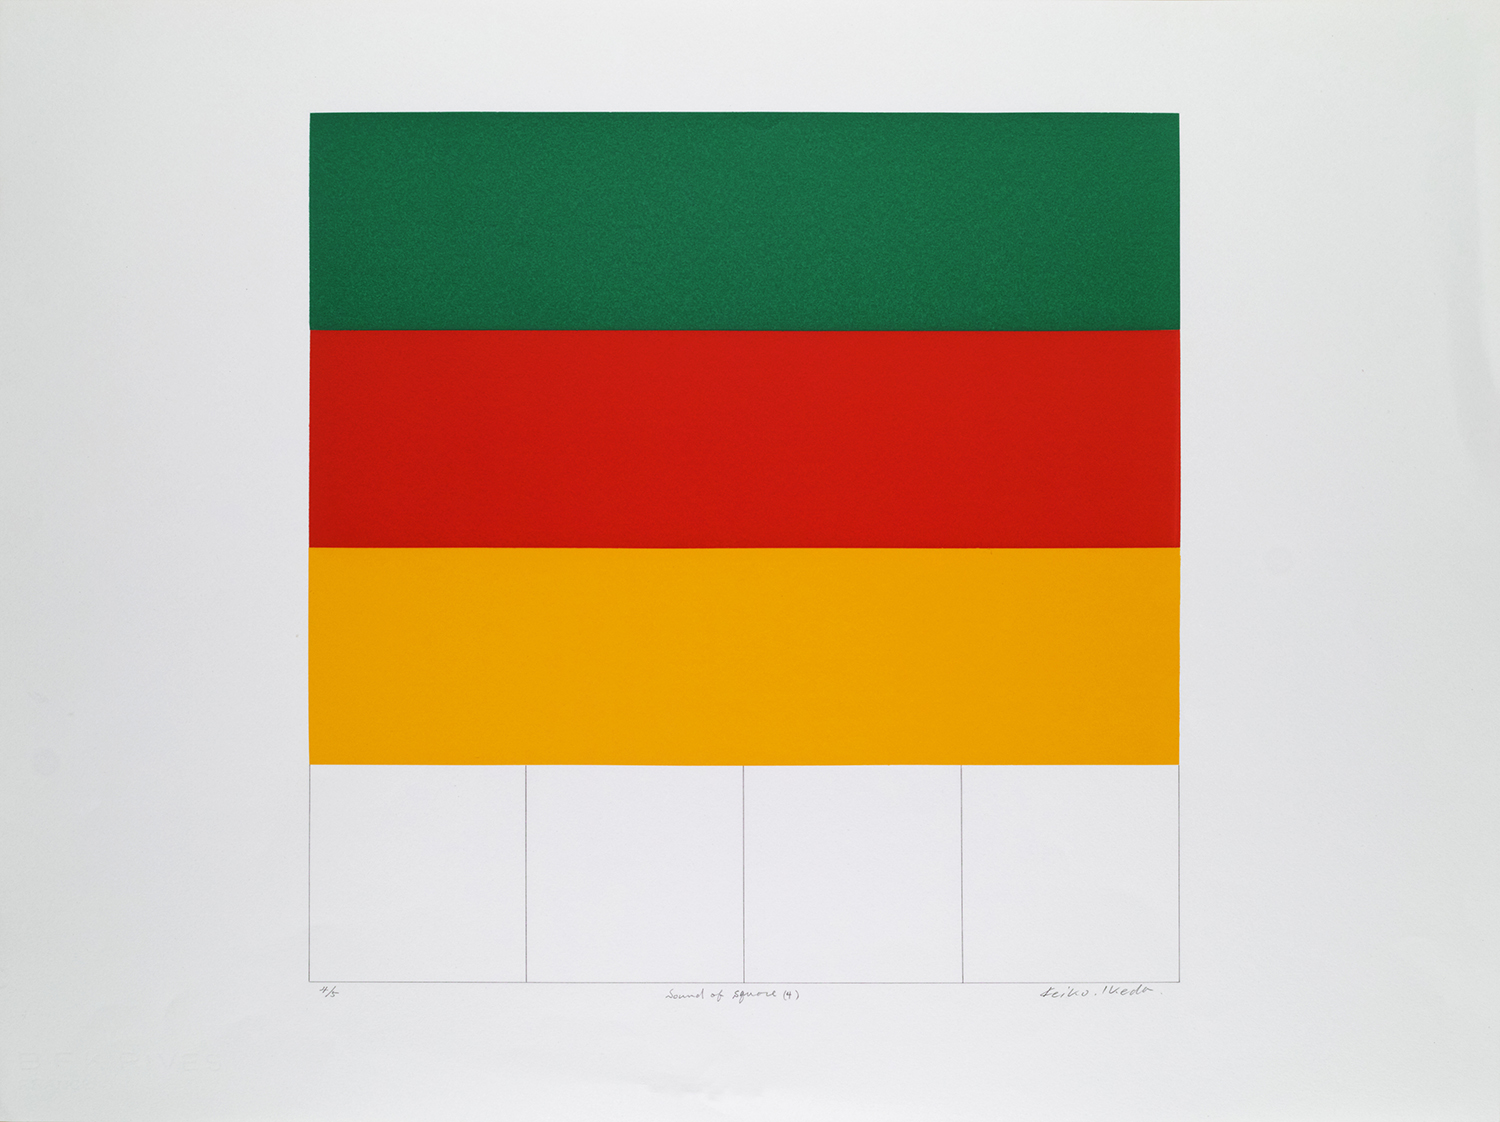 Sound of Square (4) Nazdar color silkscreen, pencil on BFK paper, 545 x 728 mm, 1982 ed:5